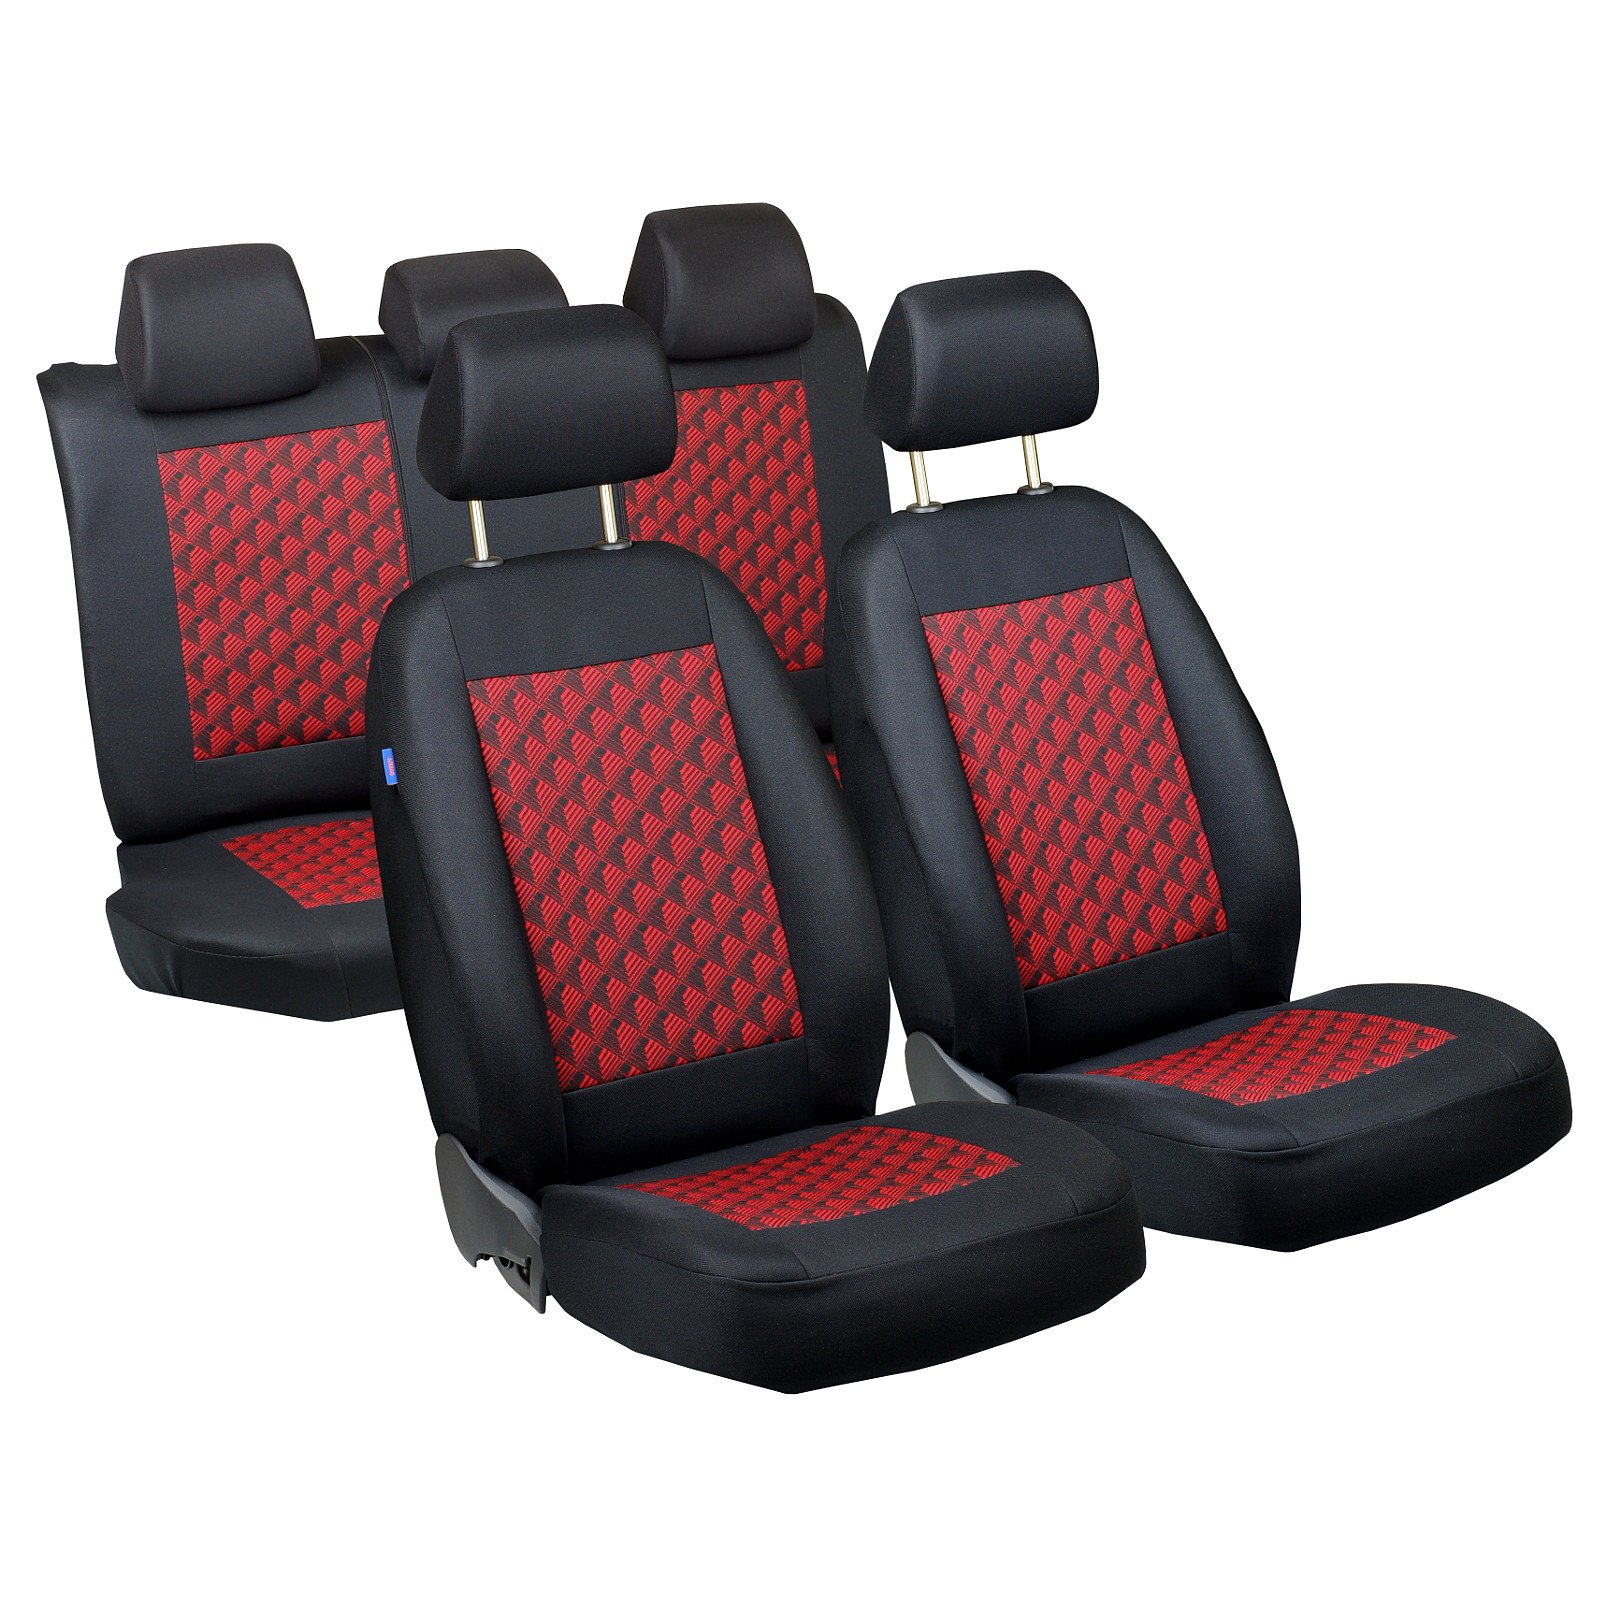 X3 Sitzbezüge - 1 Set - Farbe Premium Schwarz-rot Effekt 3D